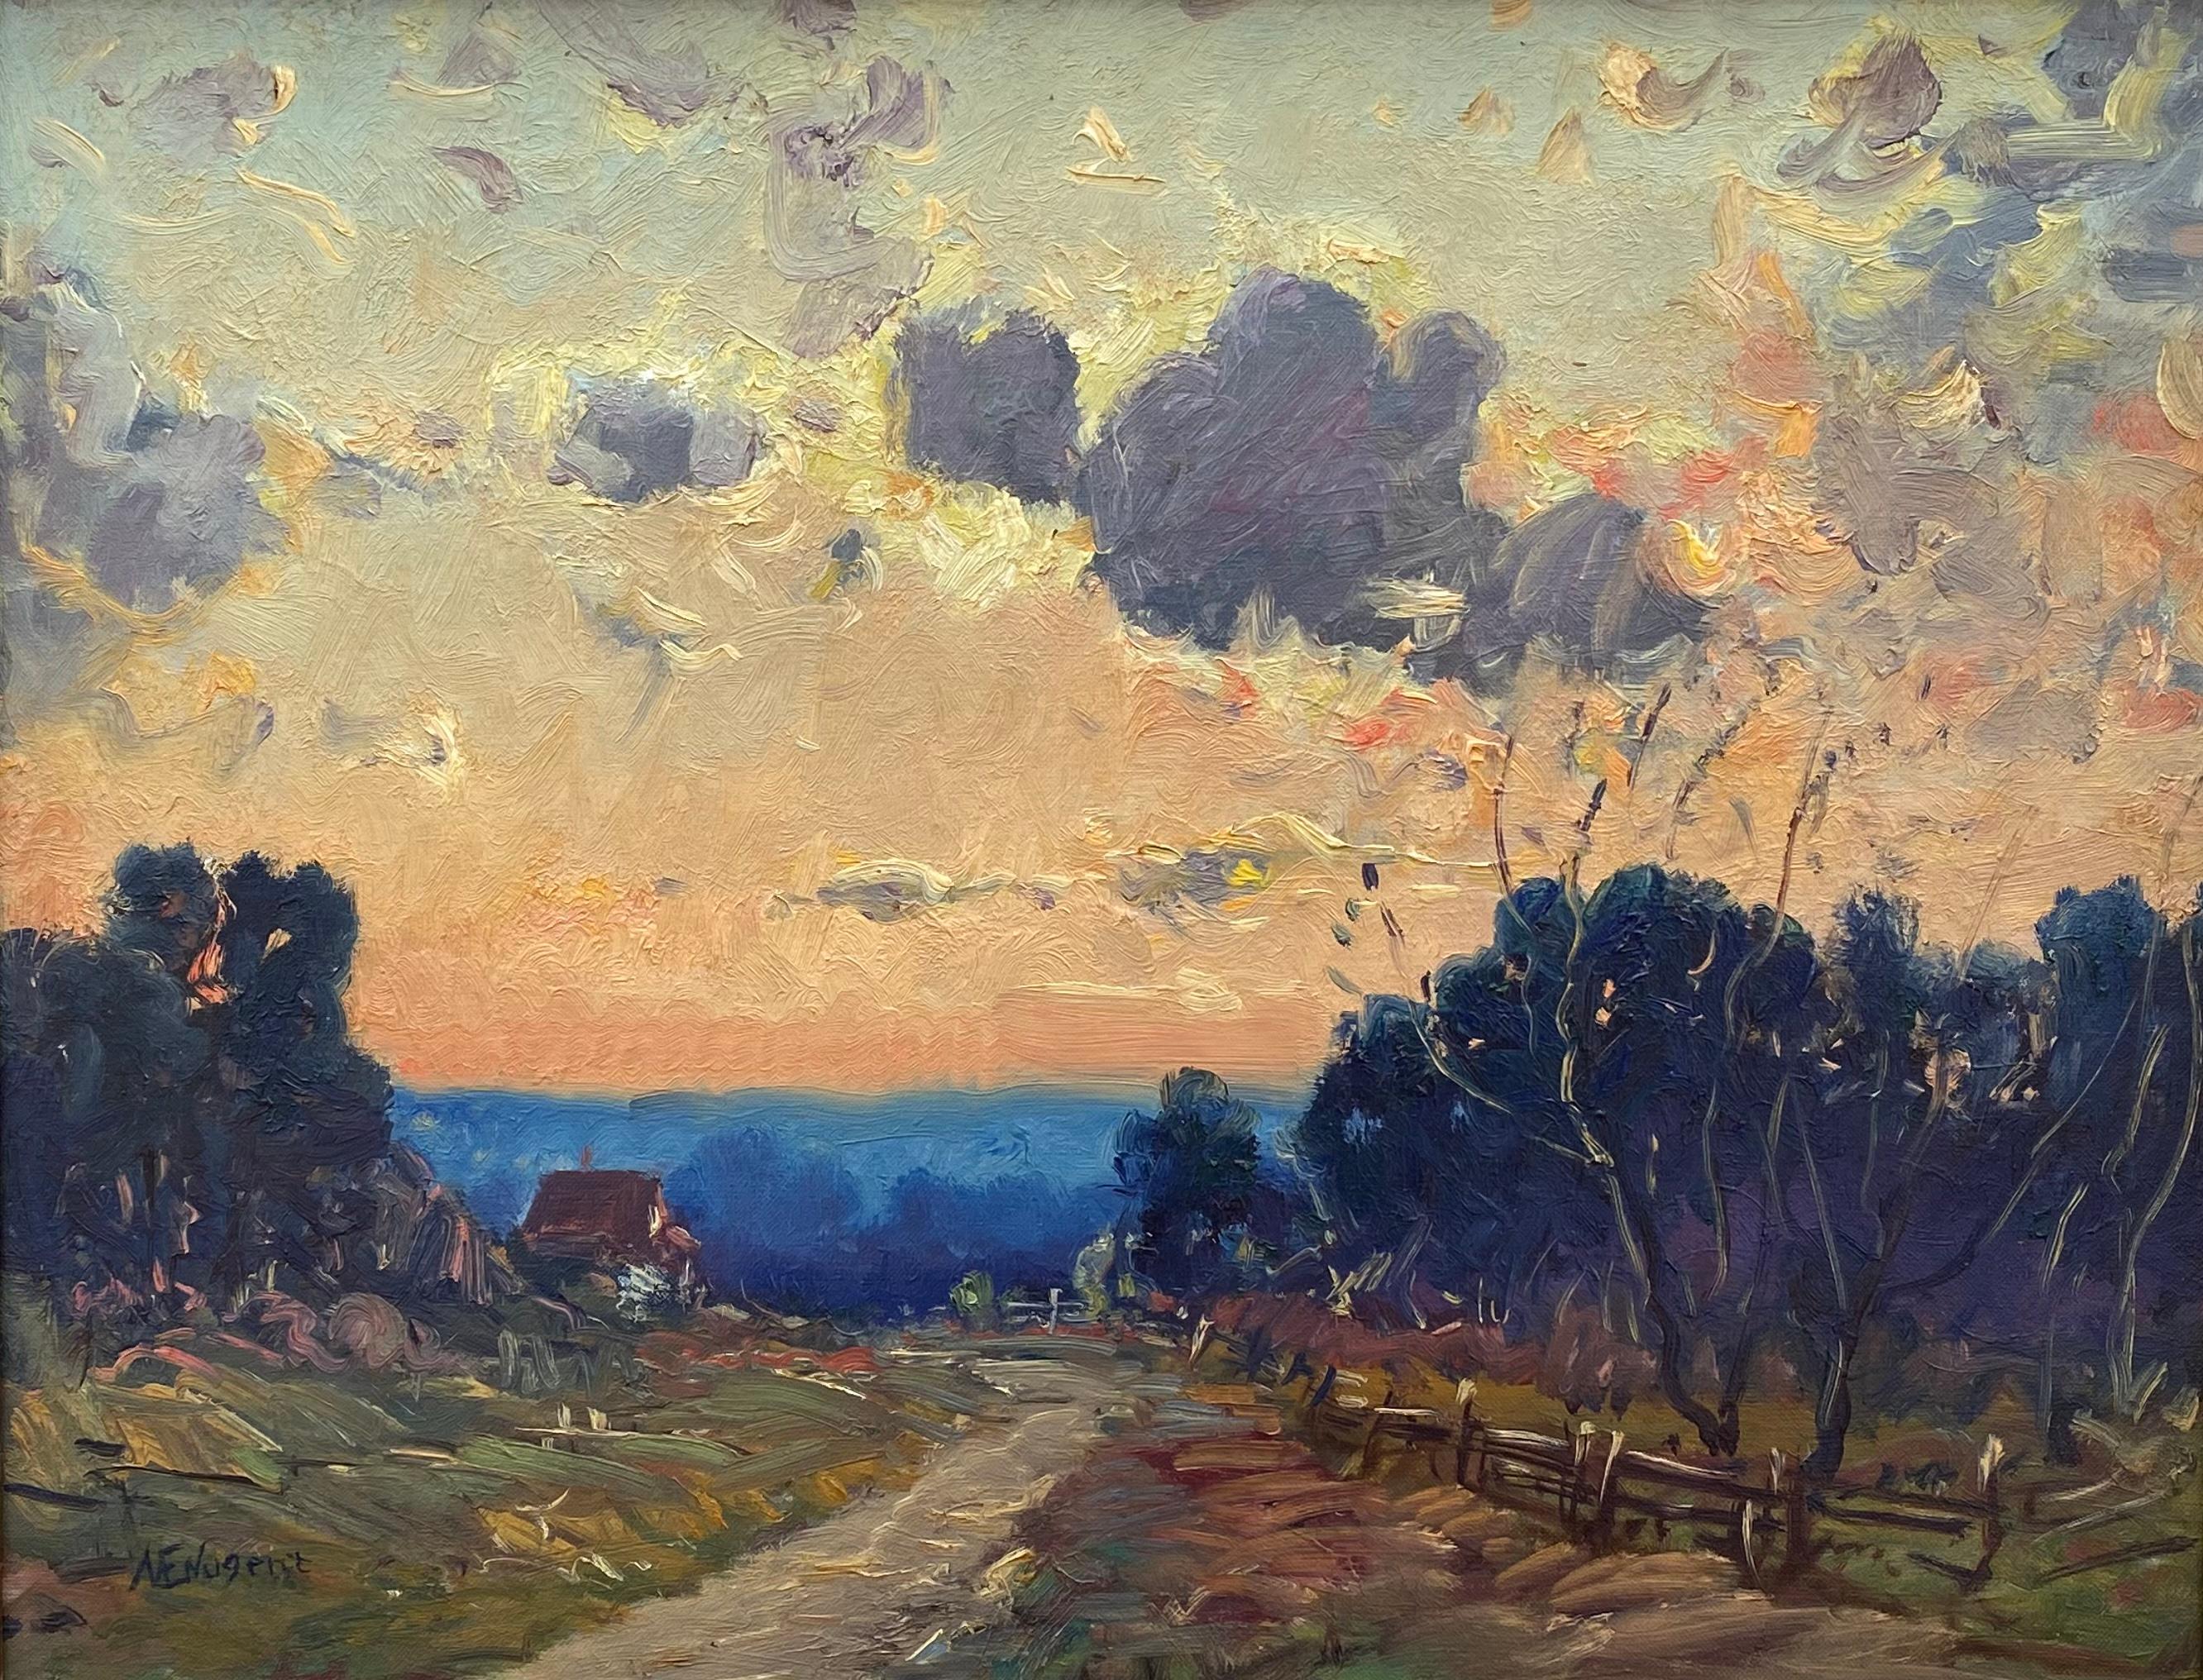 Margaret E. Nugent Landscape Painting - “Country Lane Sunset”